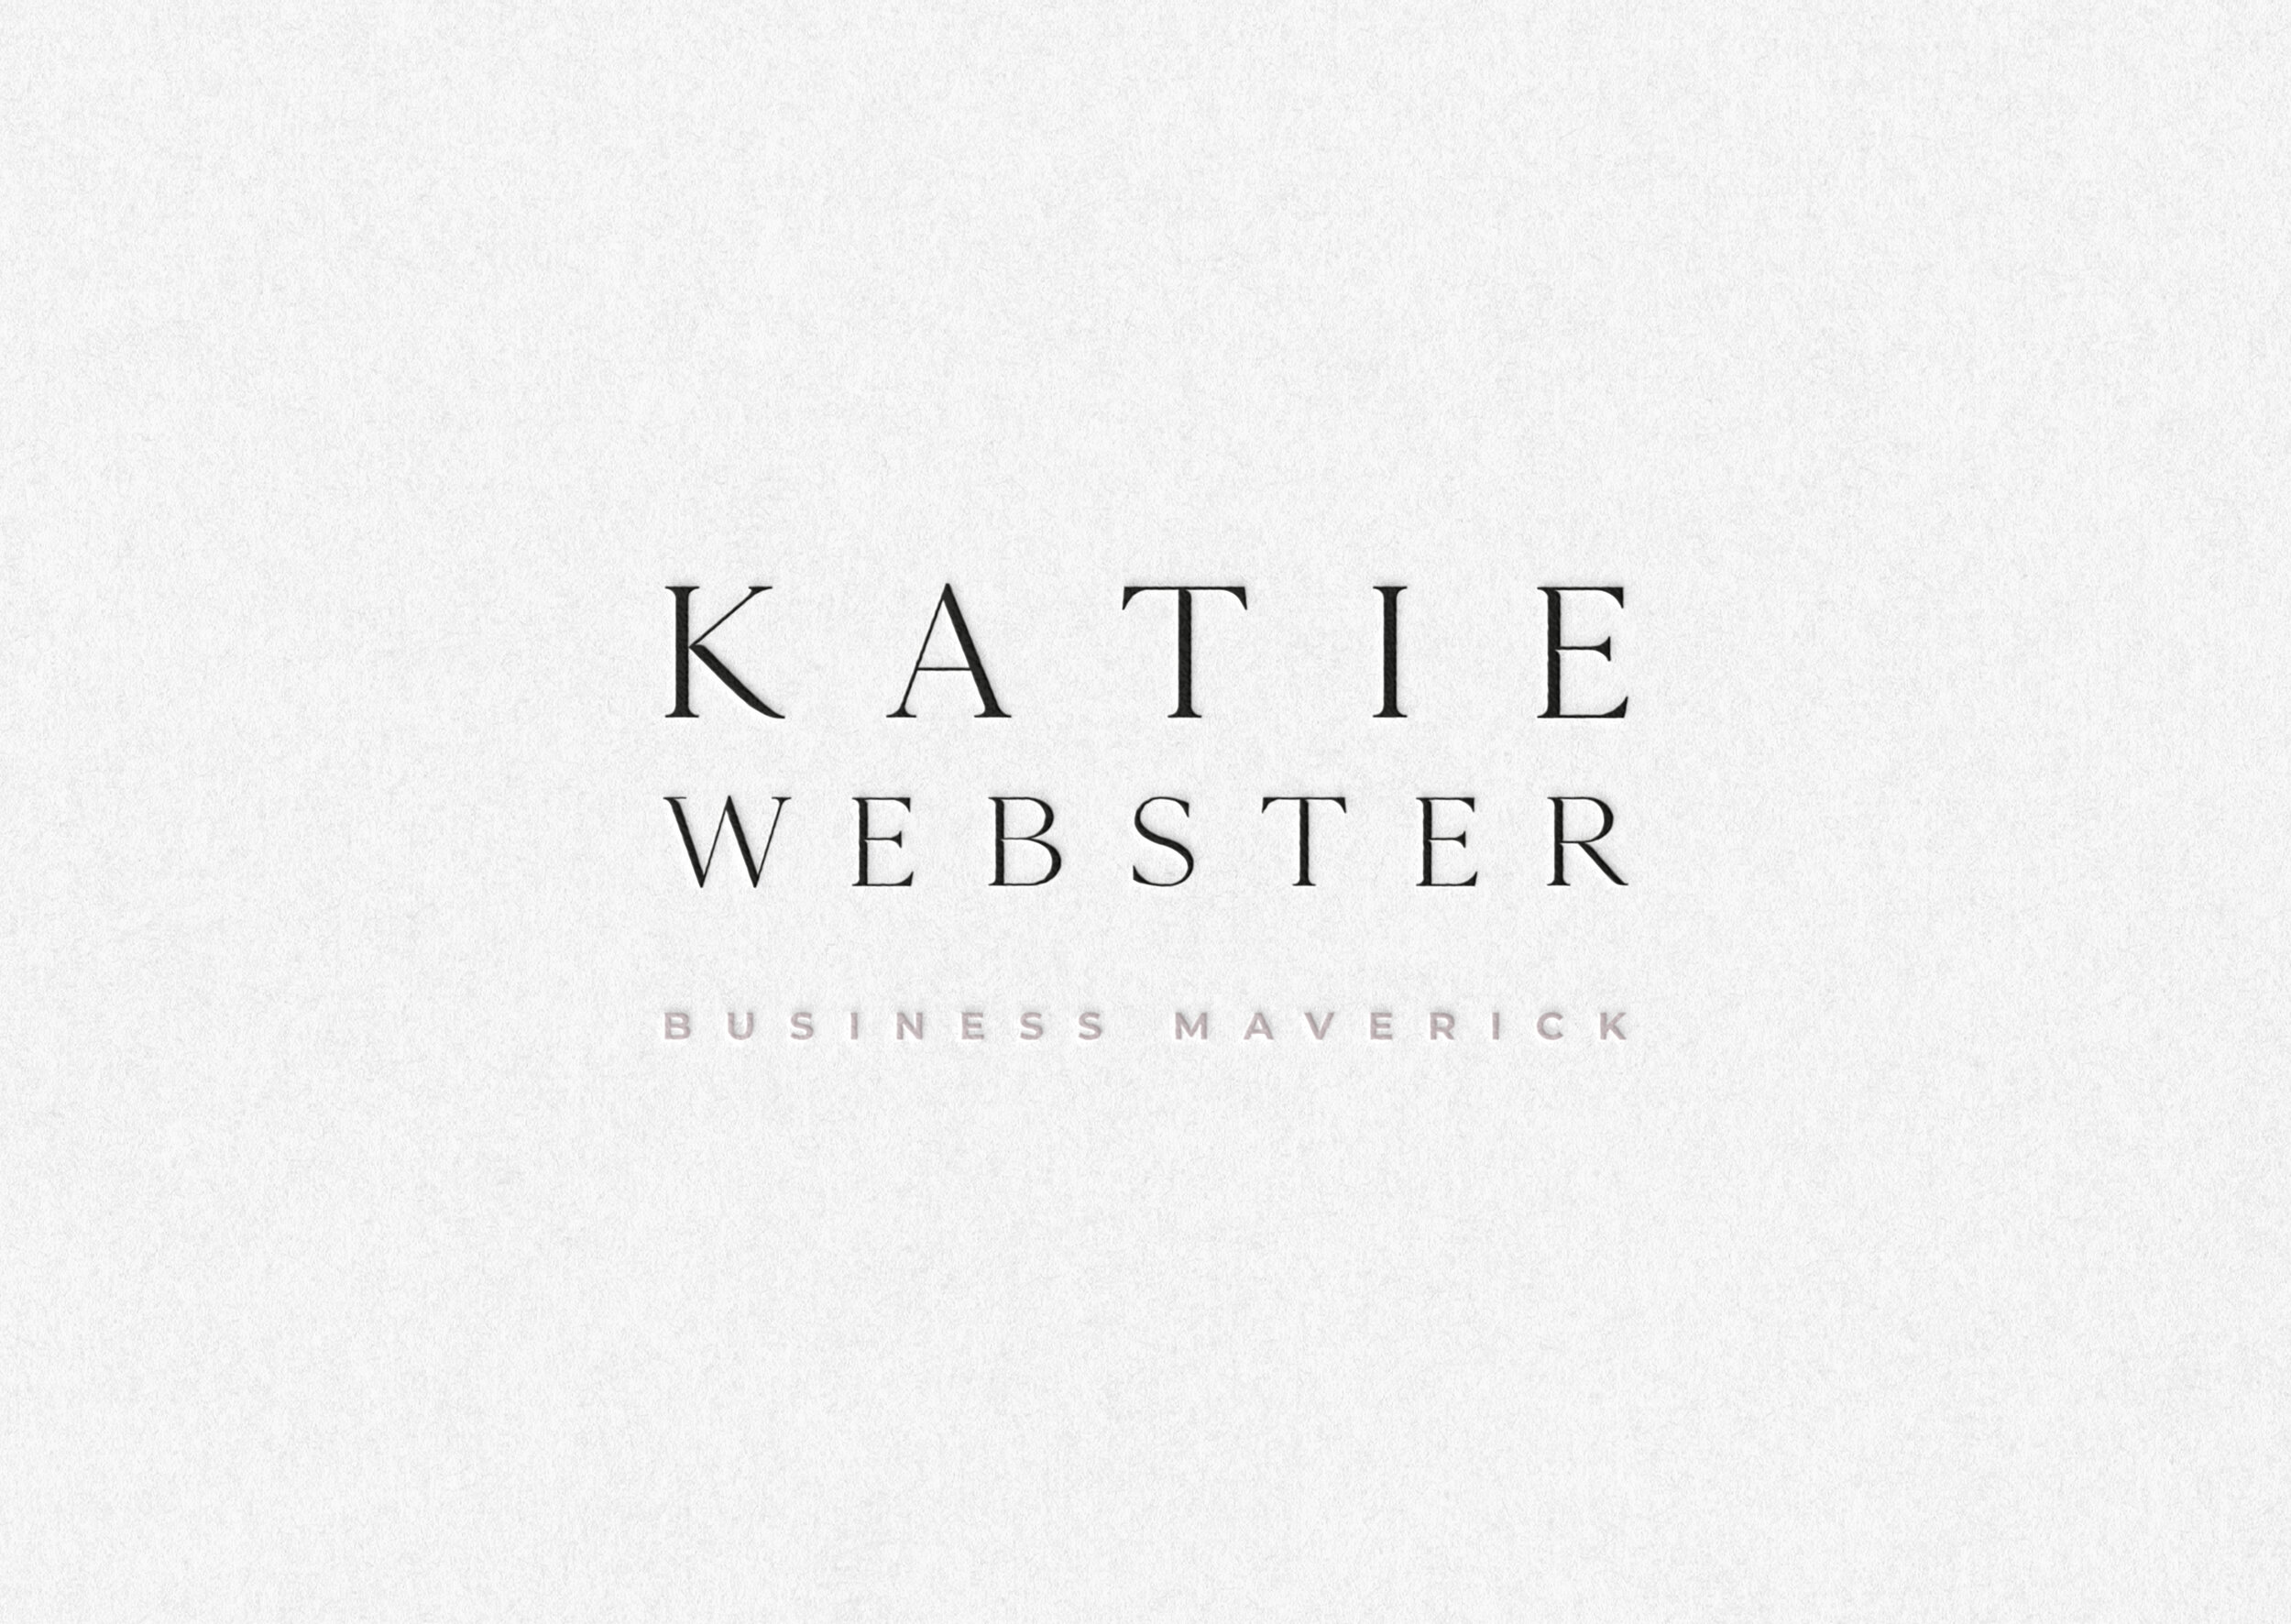 KATIE WEBSTER, BUSINESS STRATEGIST 